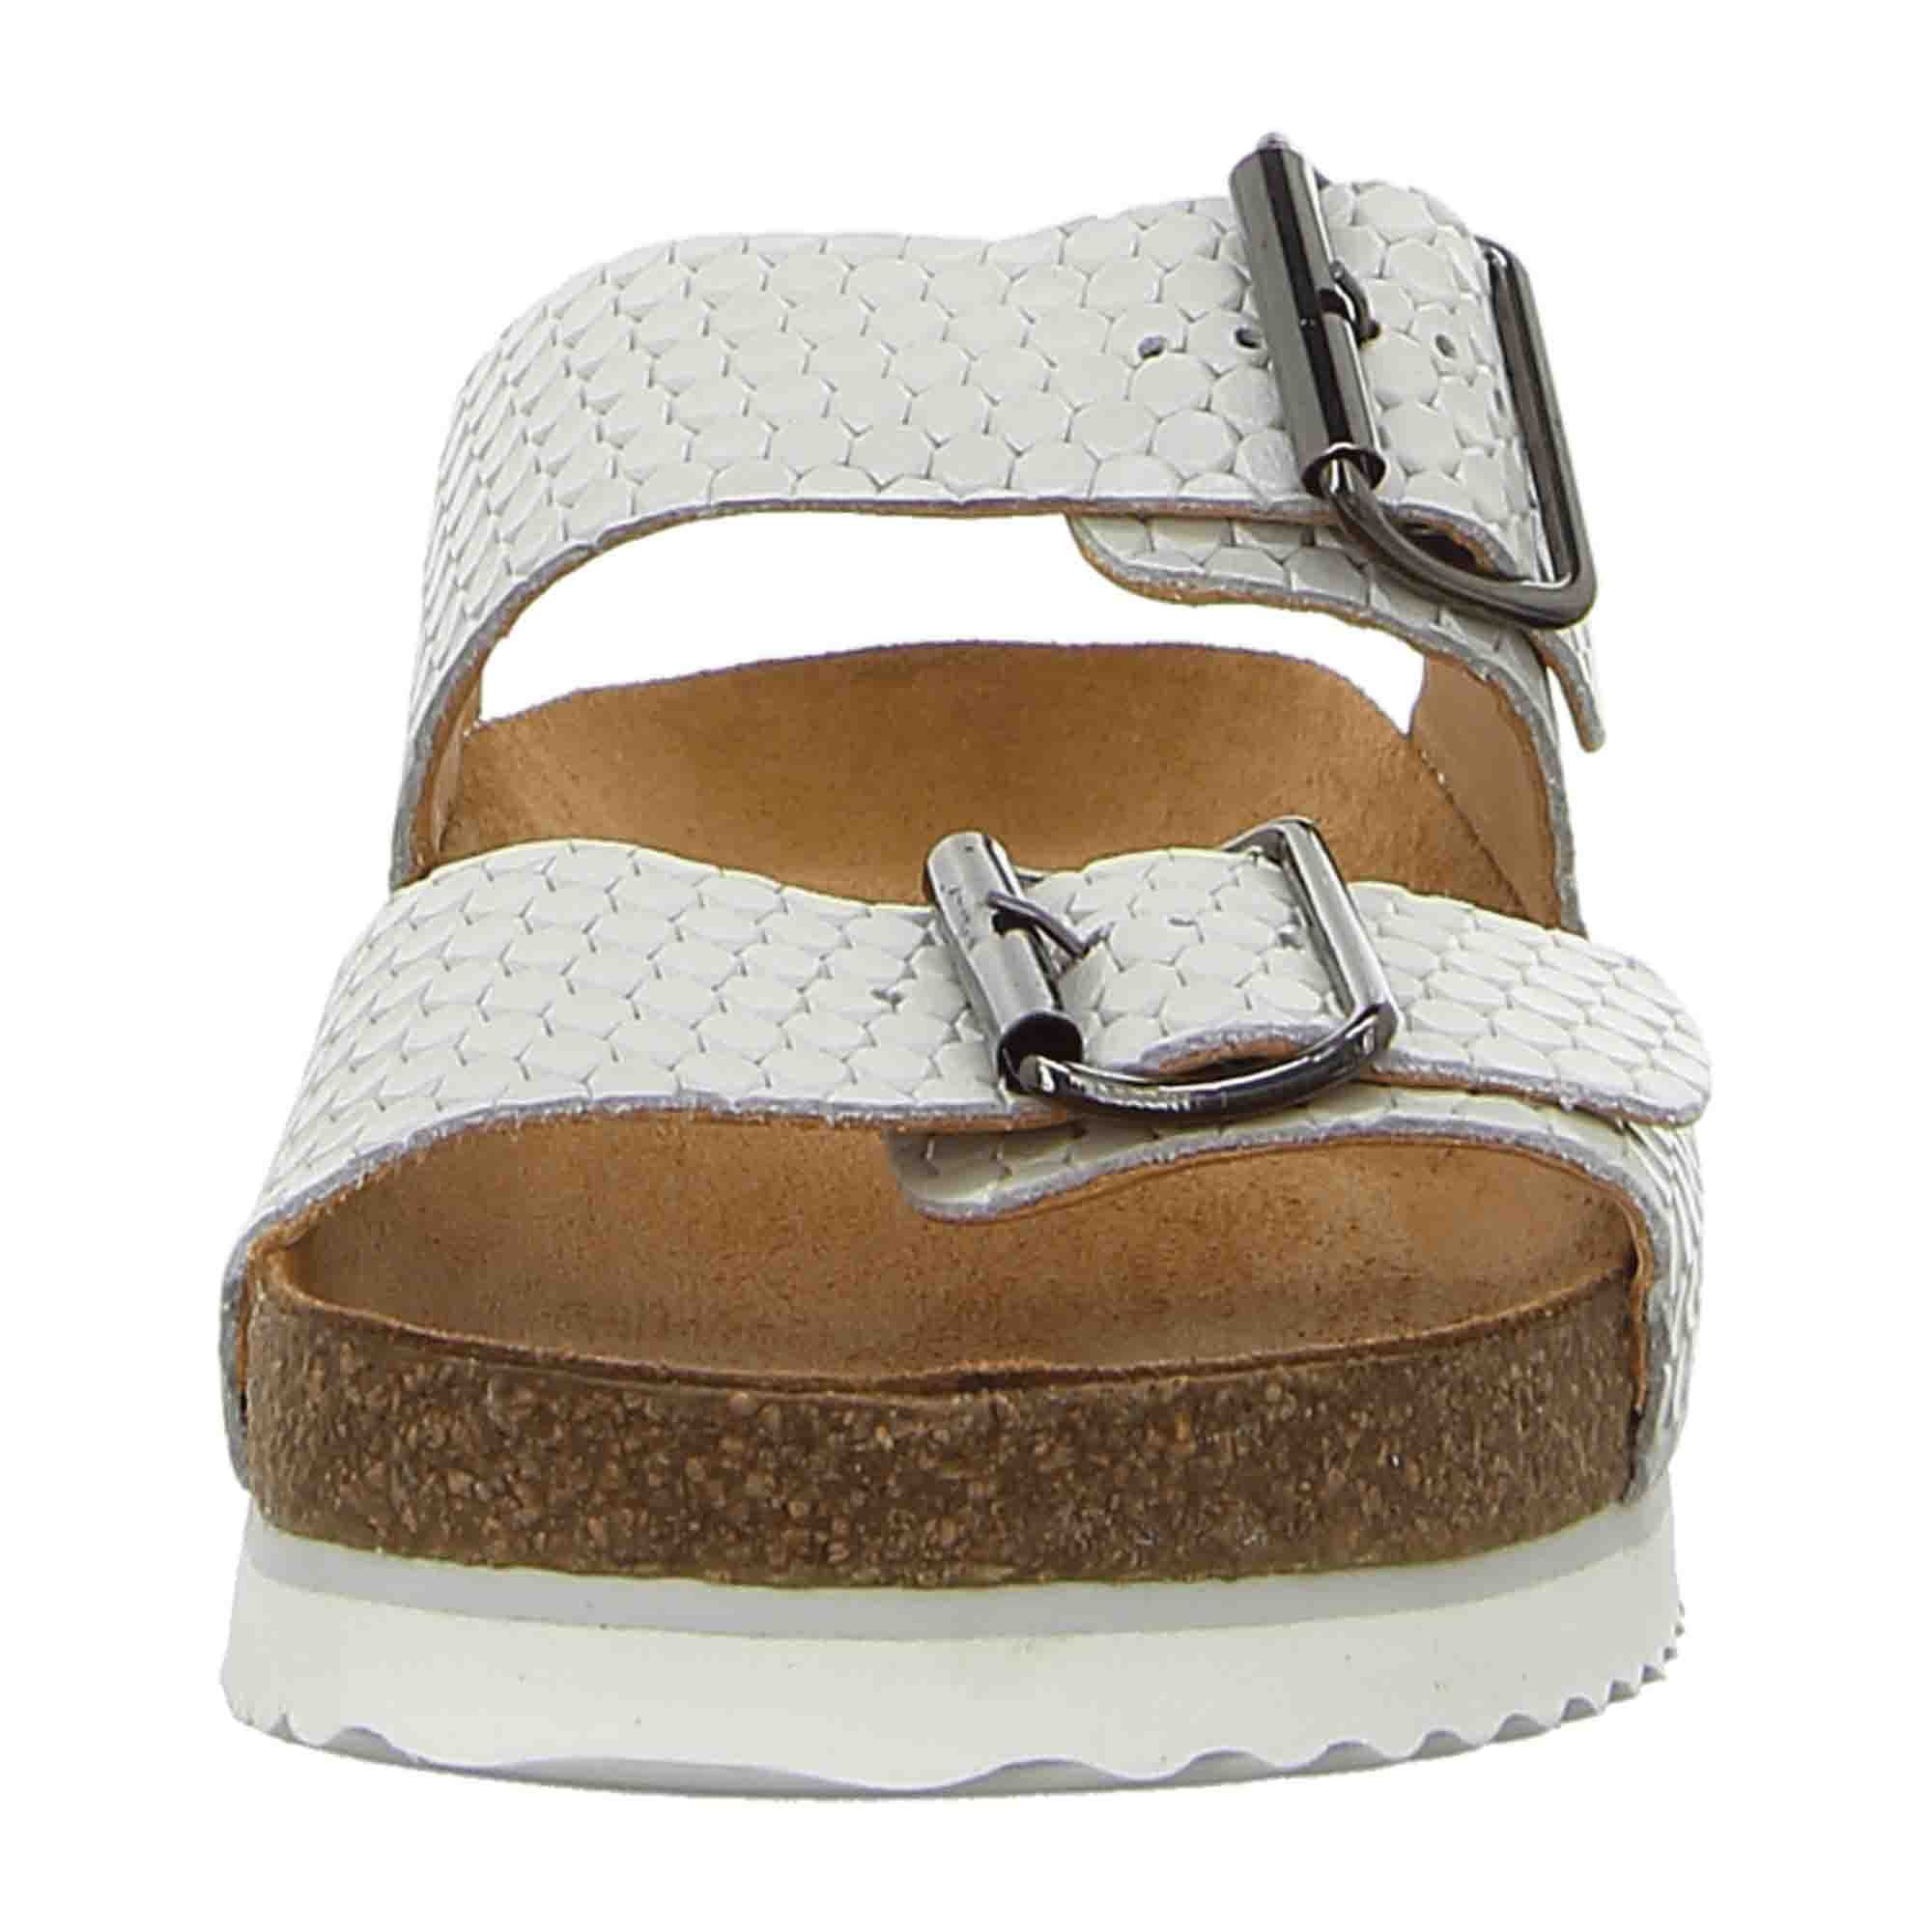 Haflinger Bio Andrea Women's Sandals, White - Eco-Friendly, Stylish Comfort